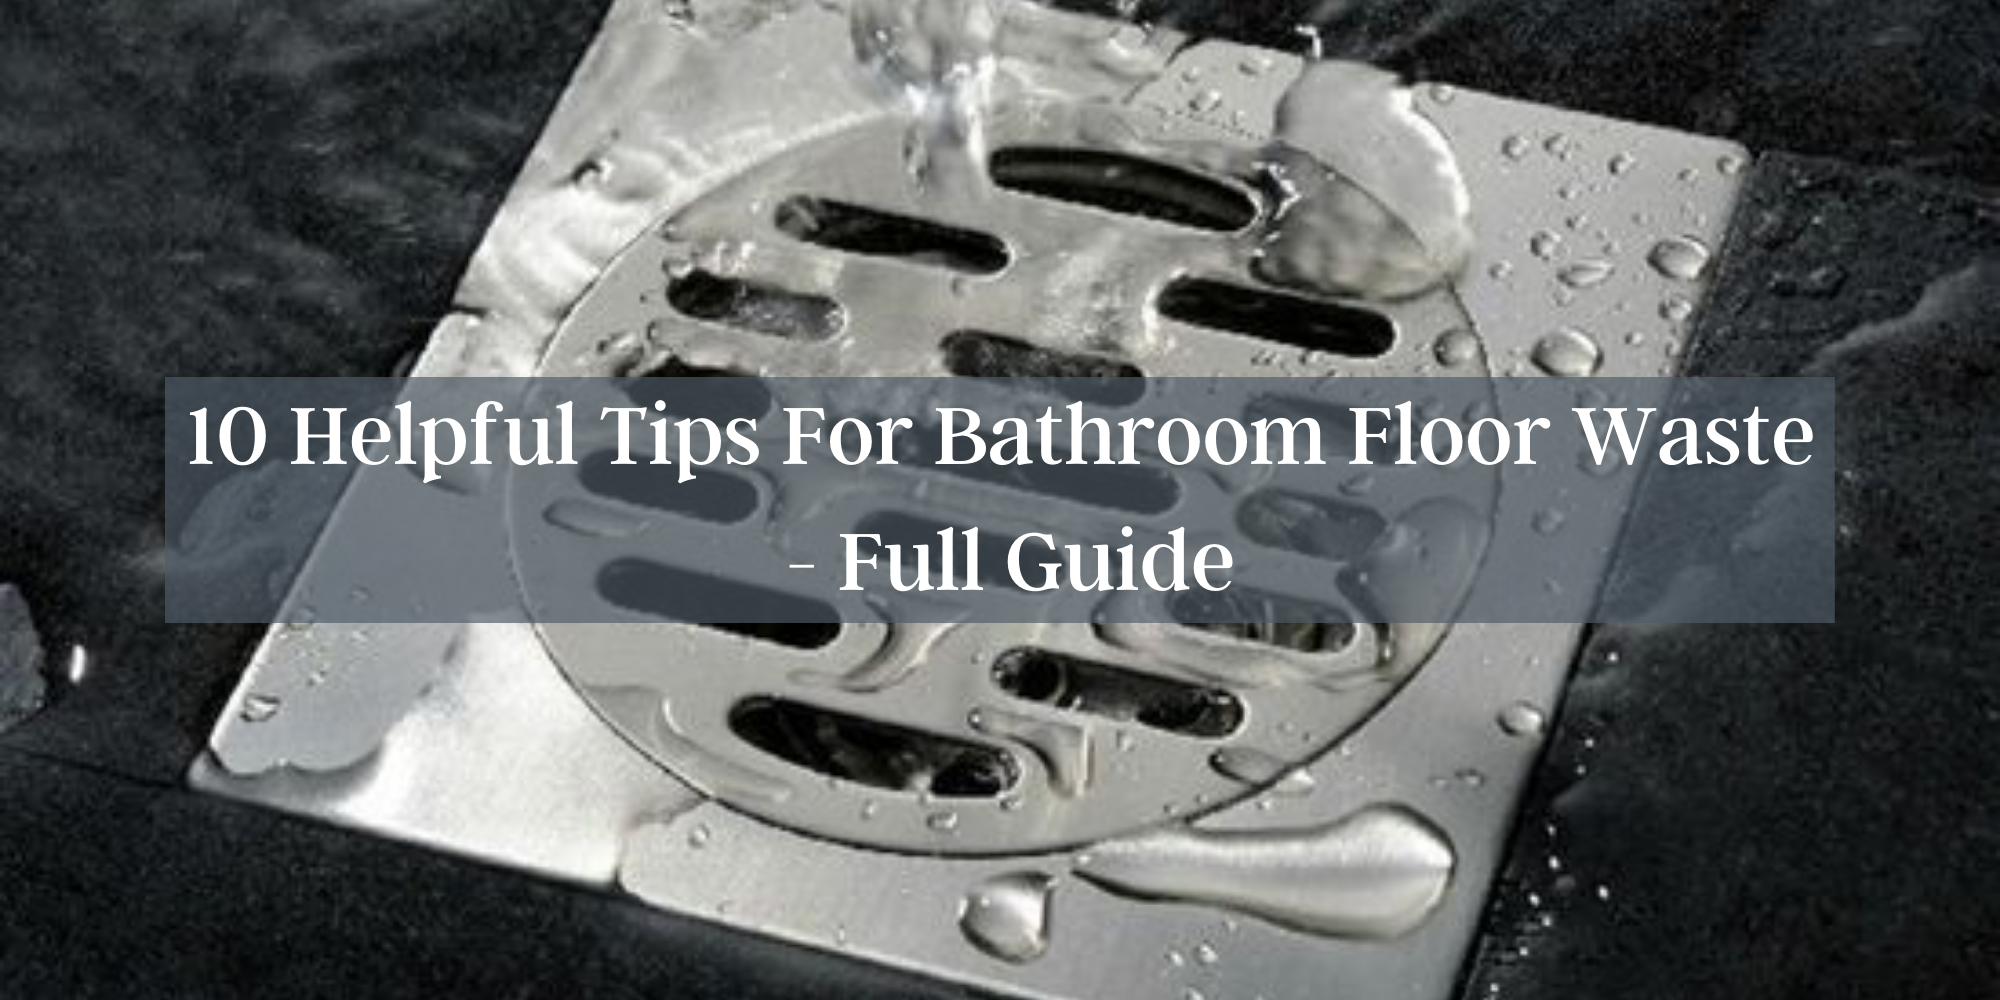 10 Helpful Tips For Bathroom Floor Waste - Full Guide